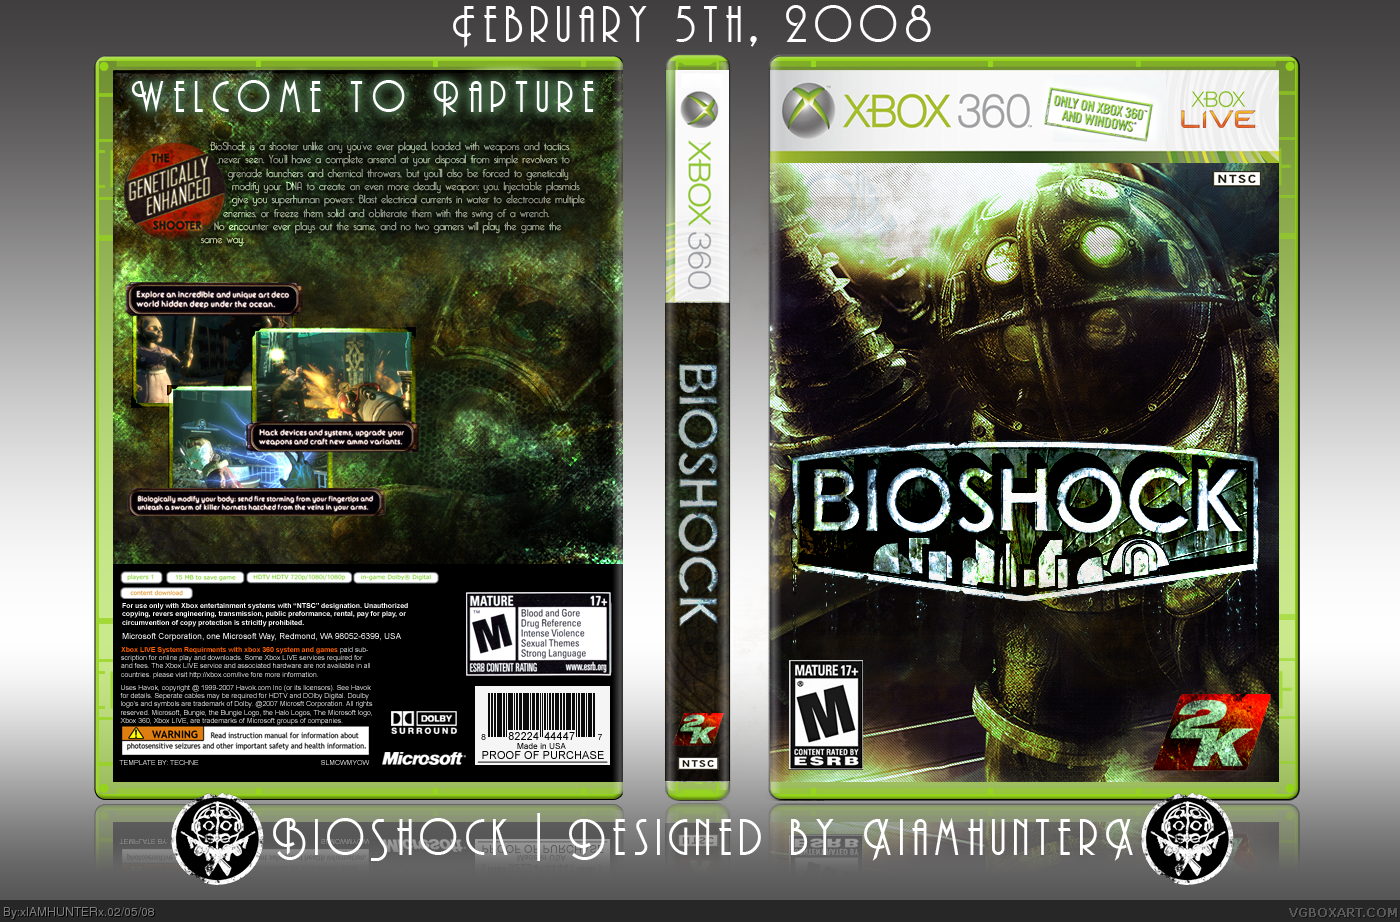 Xbox 360 русский язык игры. Bioshock Xbox 360 обложка. Биошок 2 обложка иксбокс360. Bioshock 2 Xbox 360 обложка. Хвох 360 диск Bioshock 2.